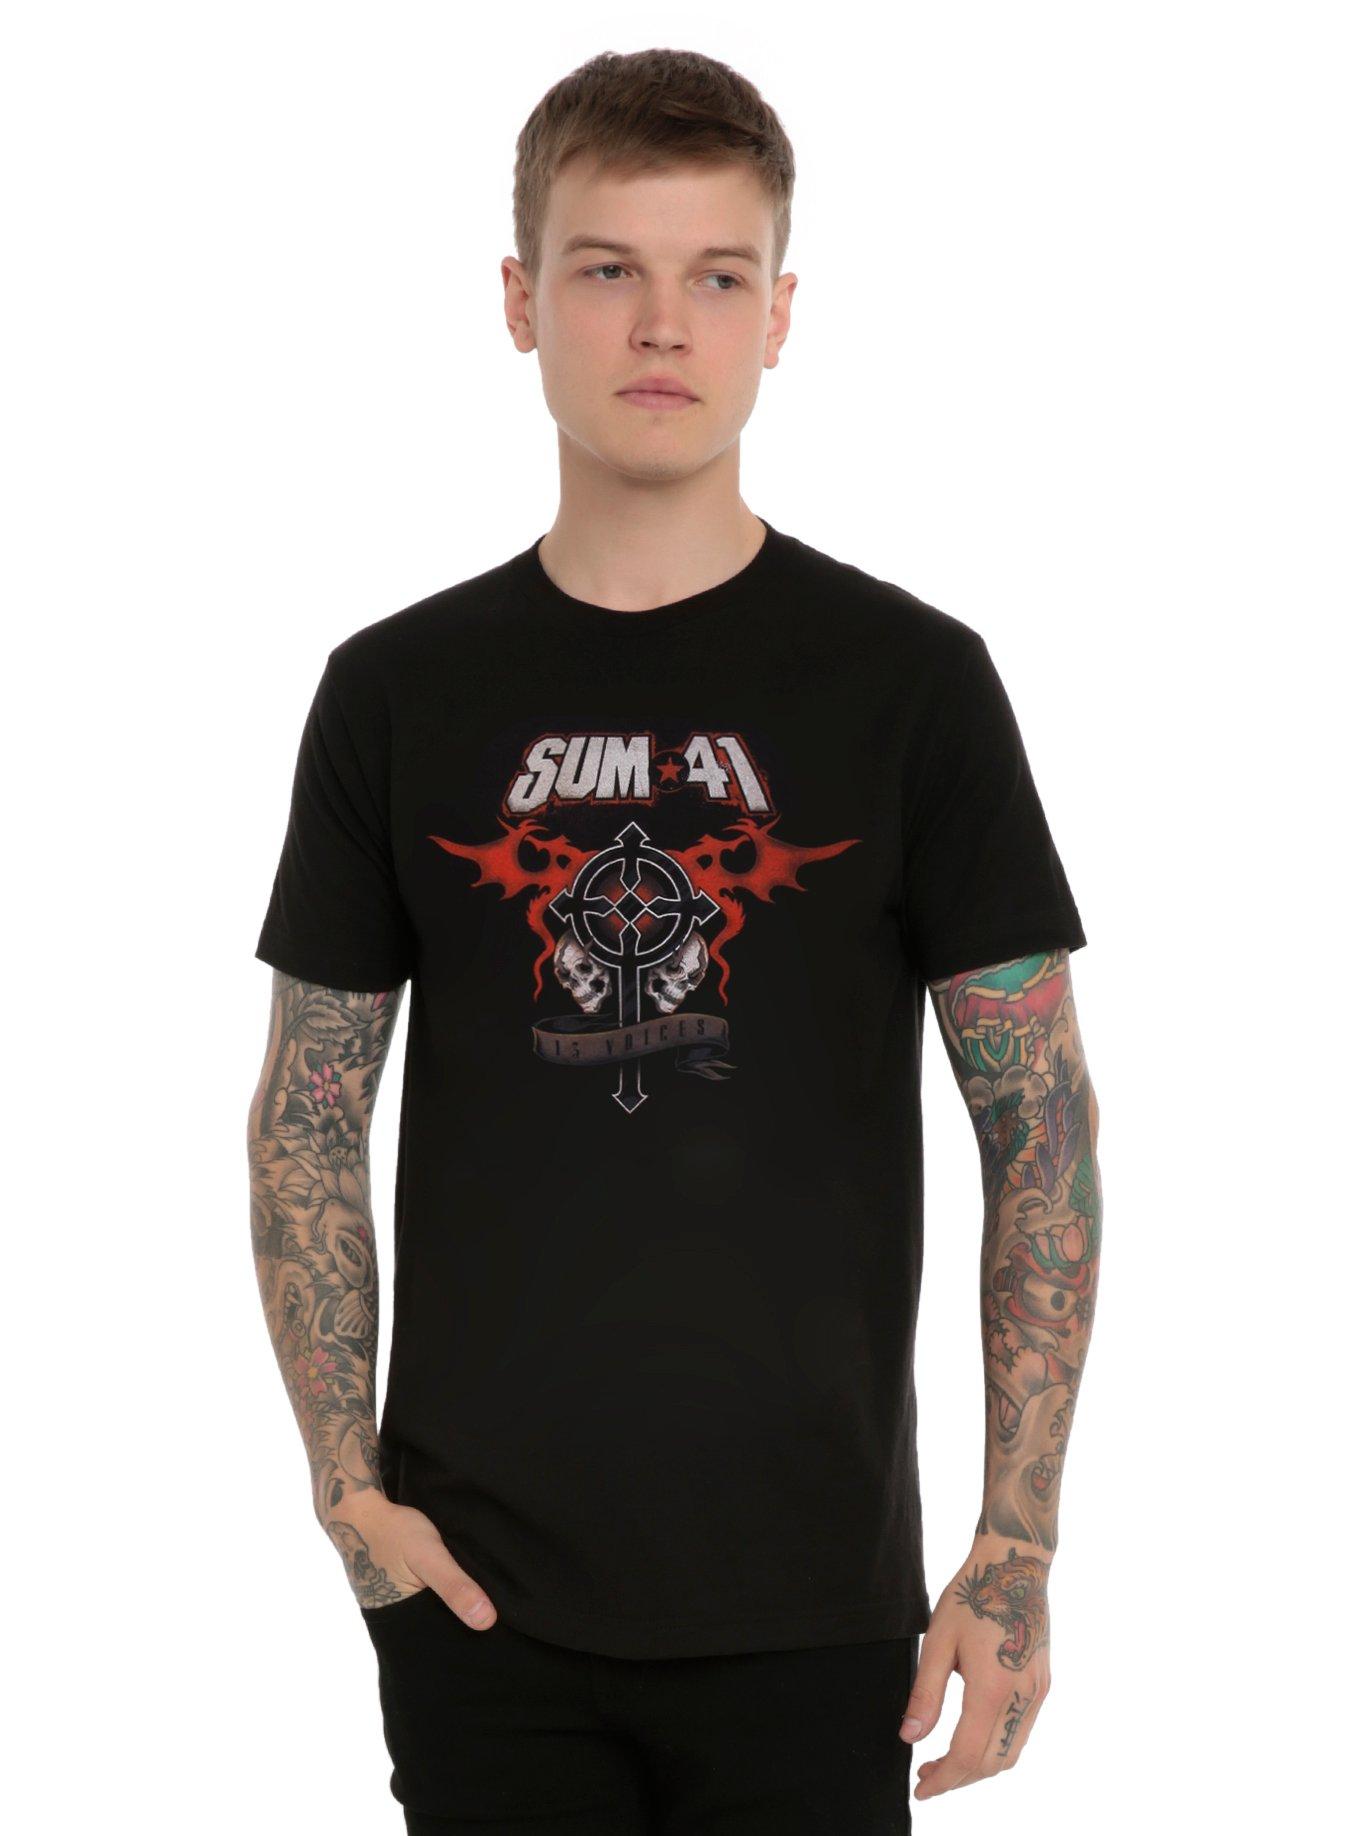 Sum 41 Pieces T-Shirts for Sale